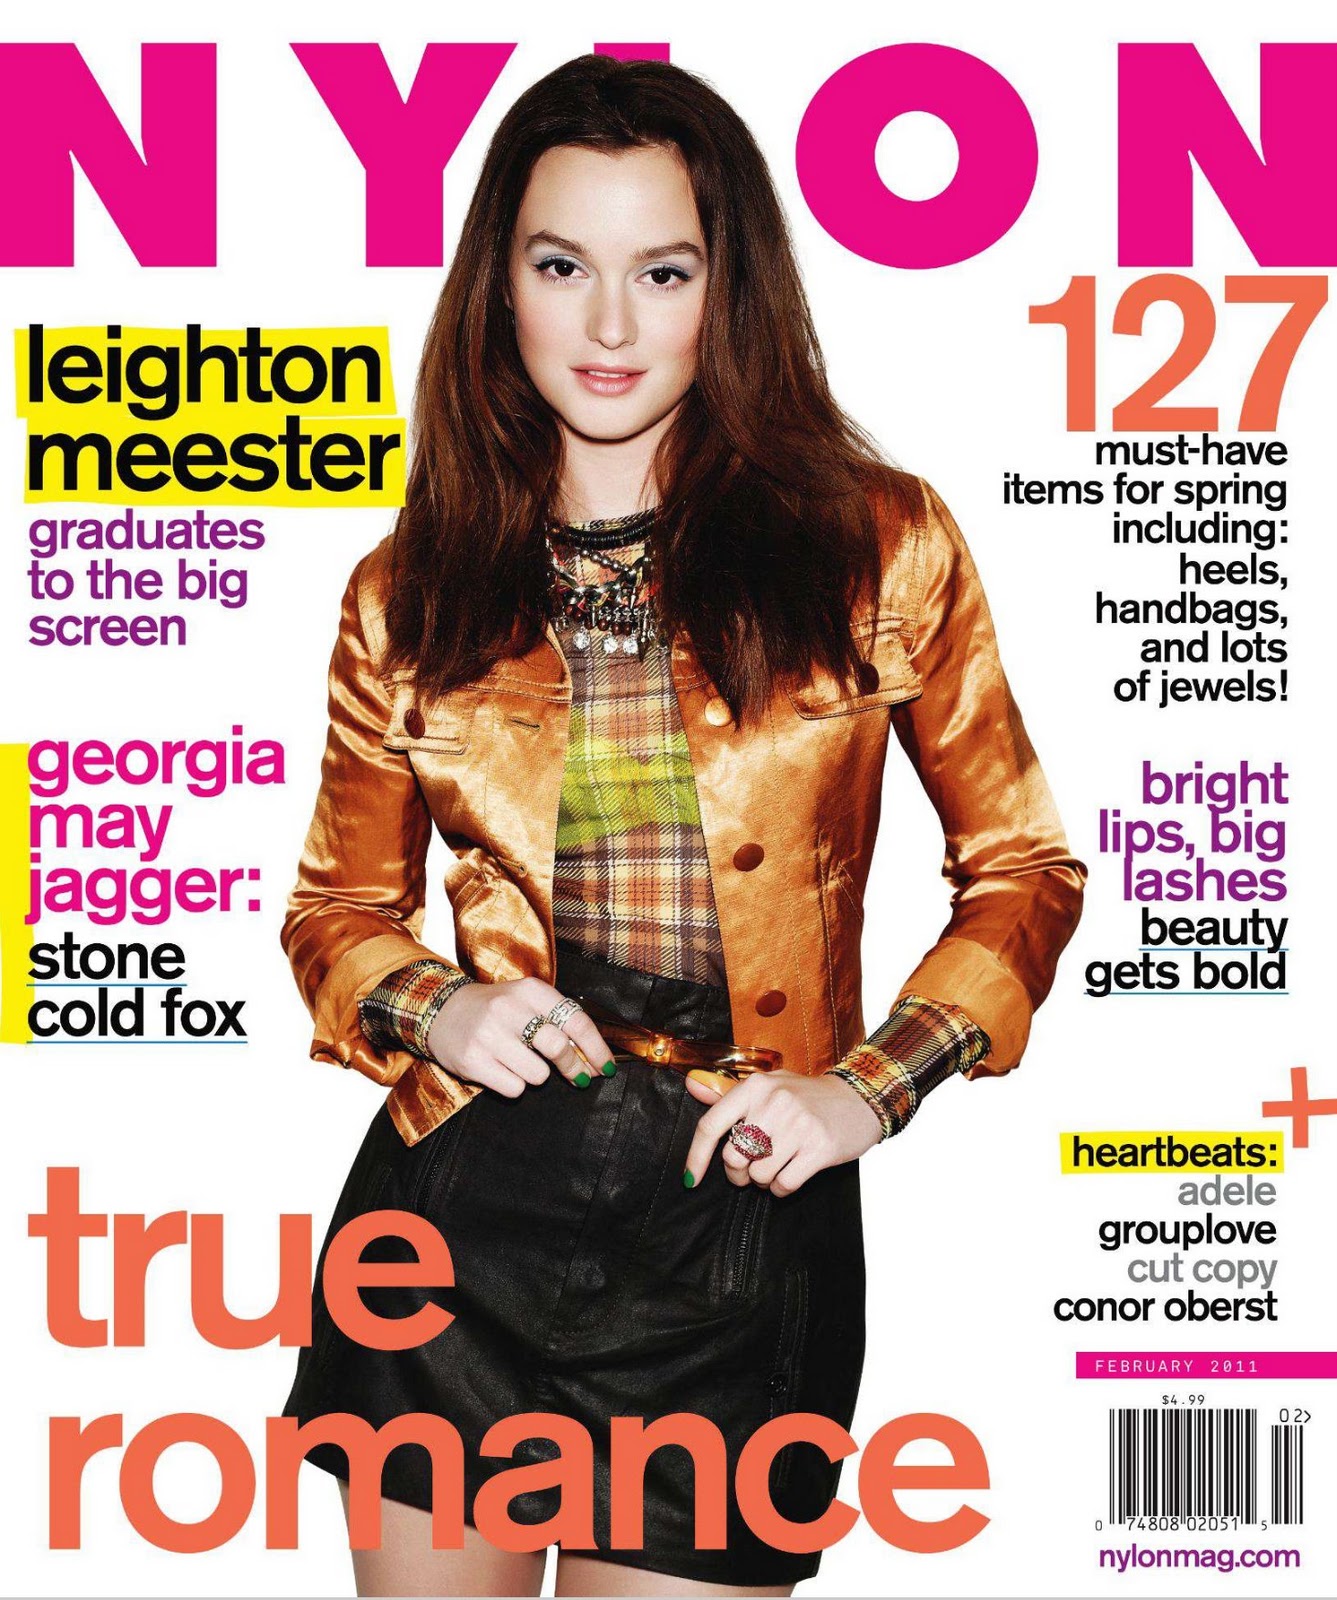 Aaaooga: Leighton Meester Graces the Cover of Nylon Magazine